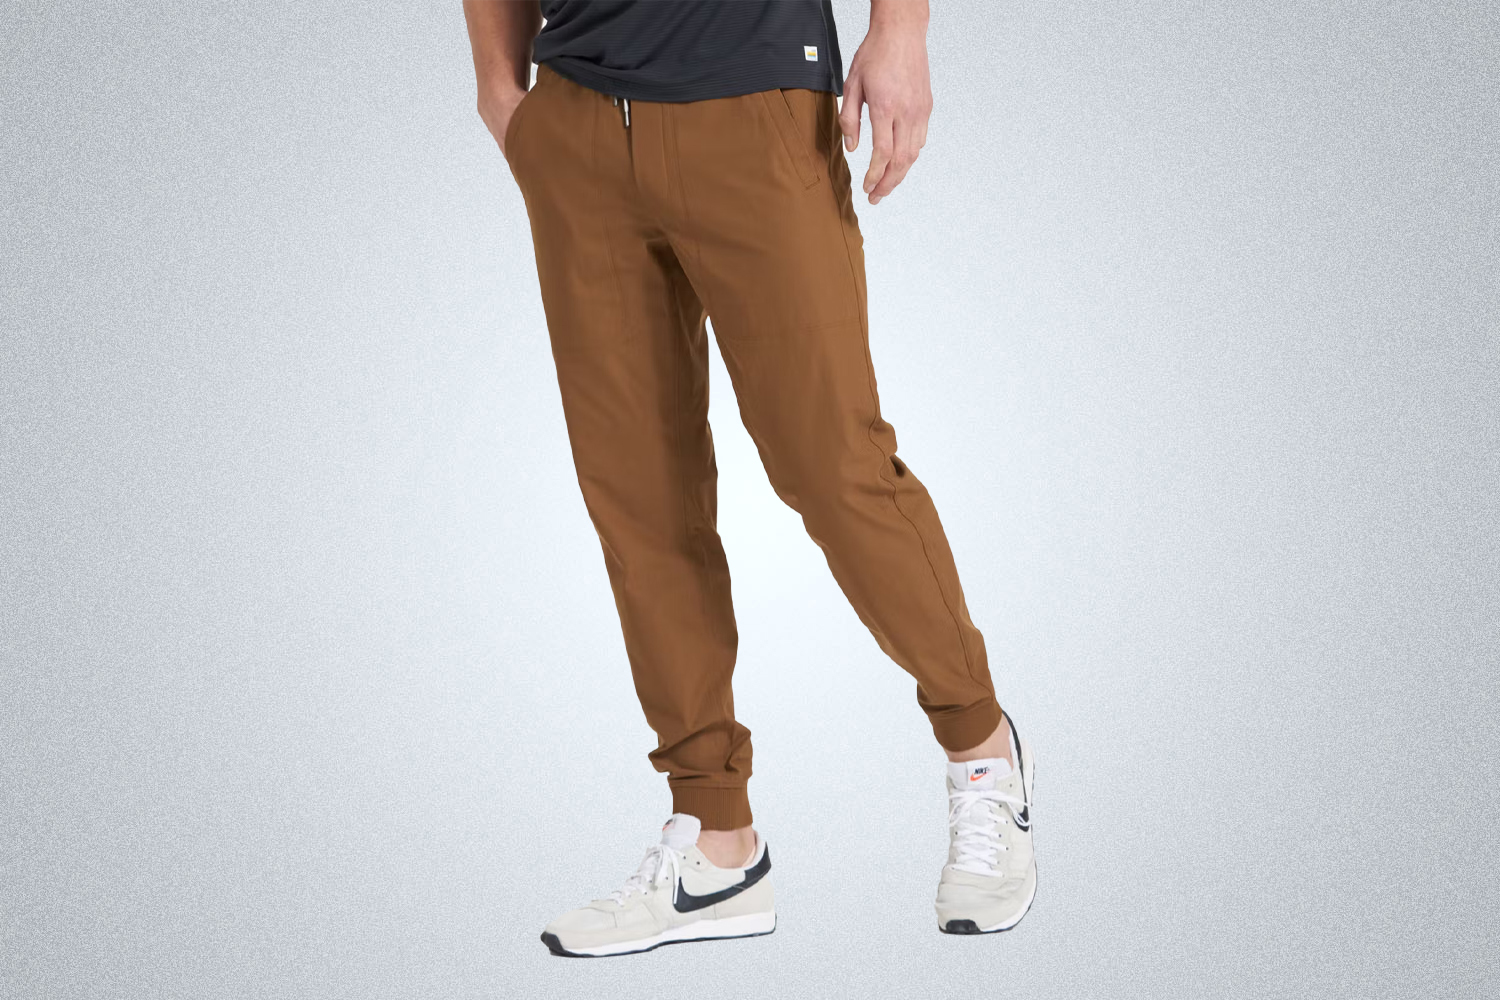 Pants for Short Men  Jeans Chinos Joggers Dress Pants  Short Inseams   Under 510